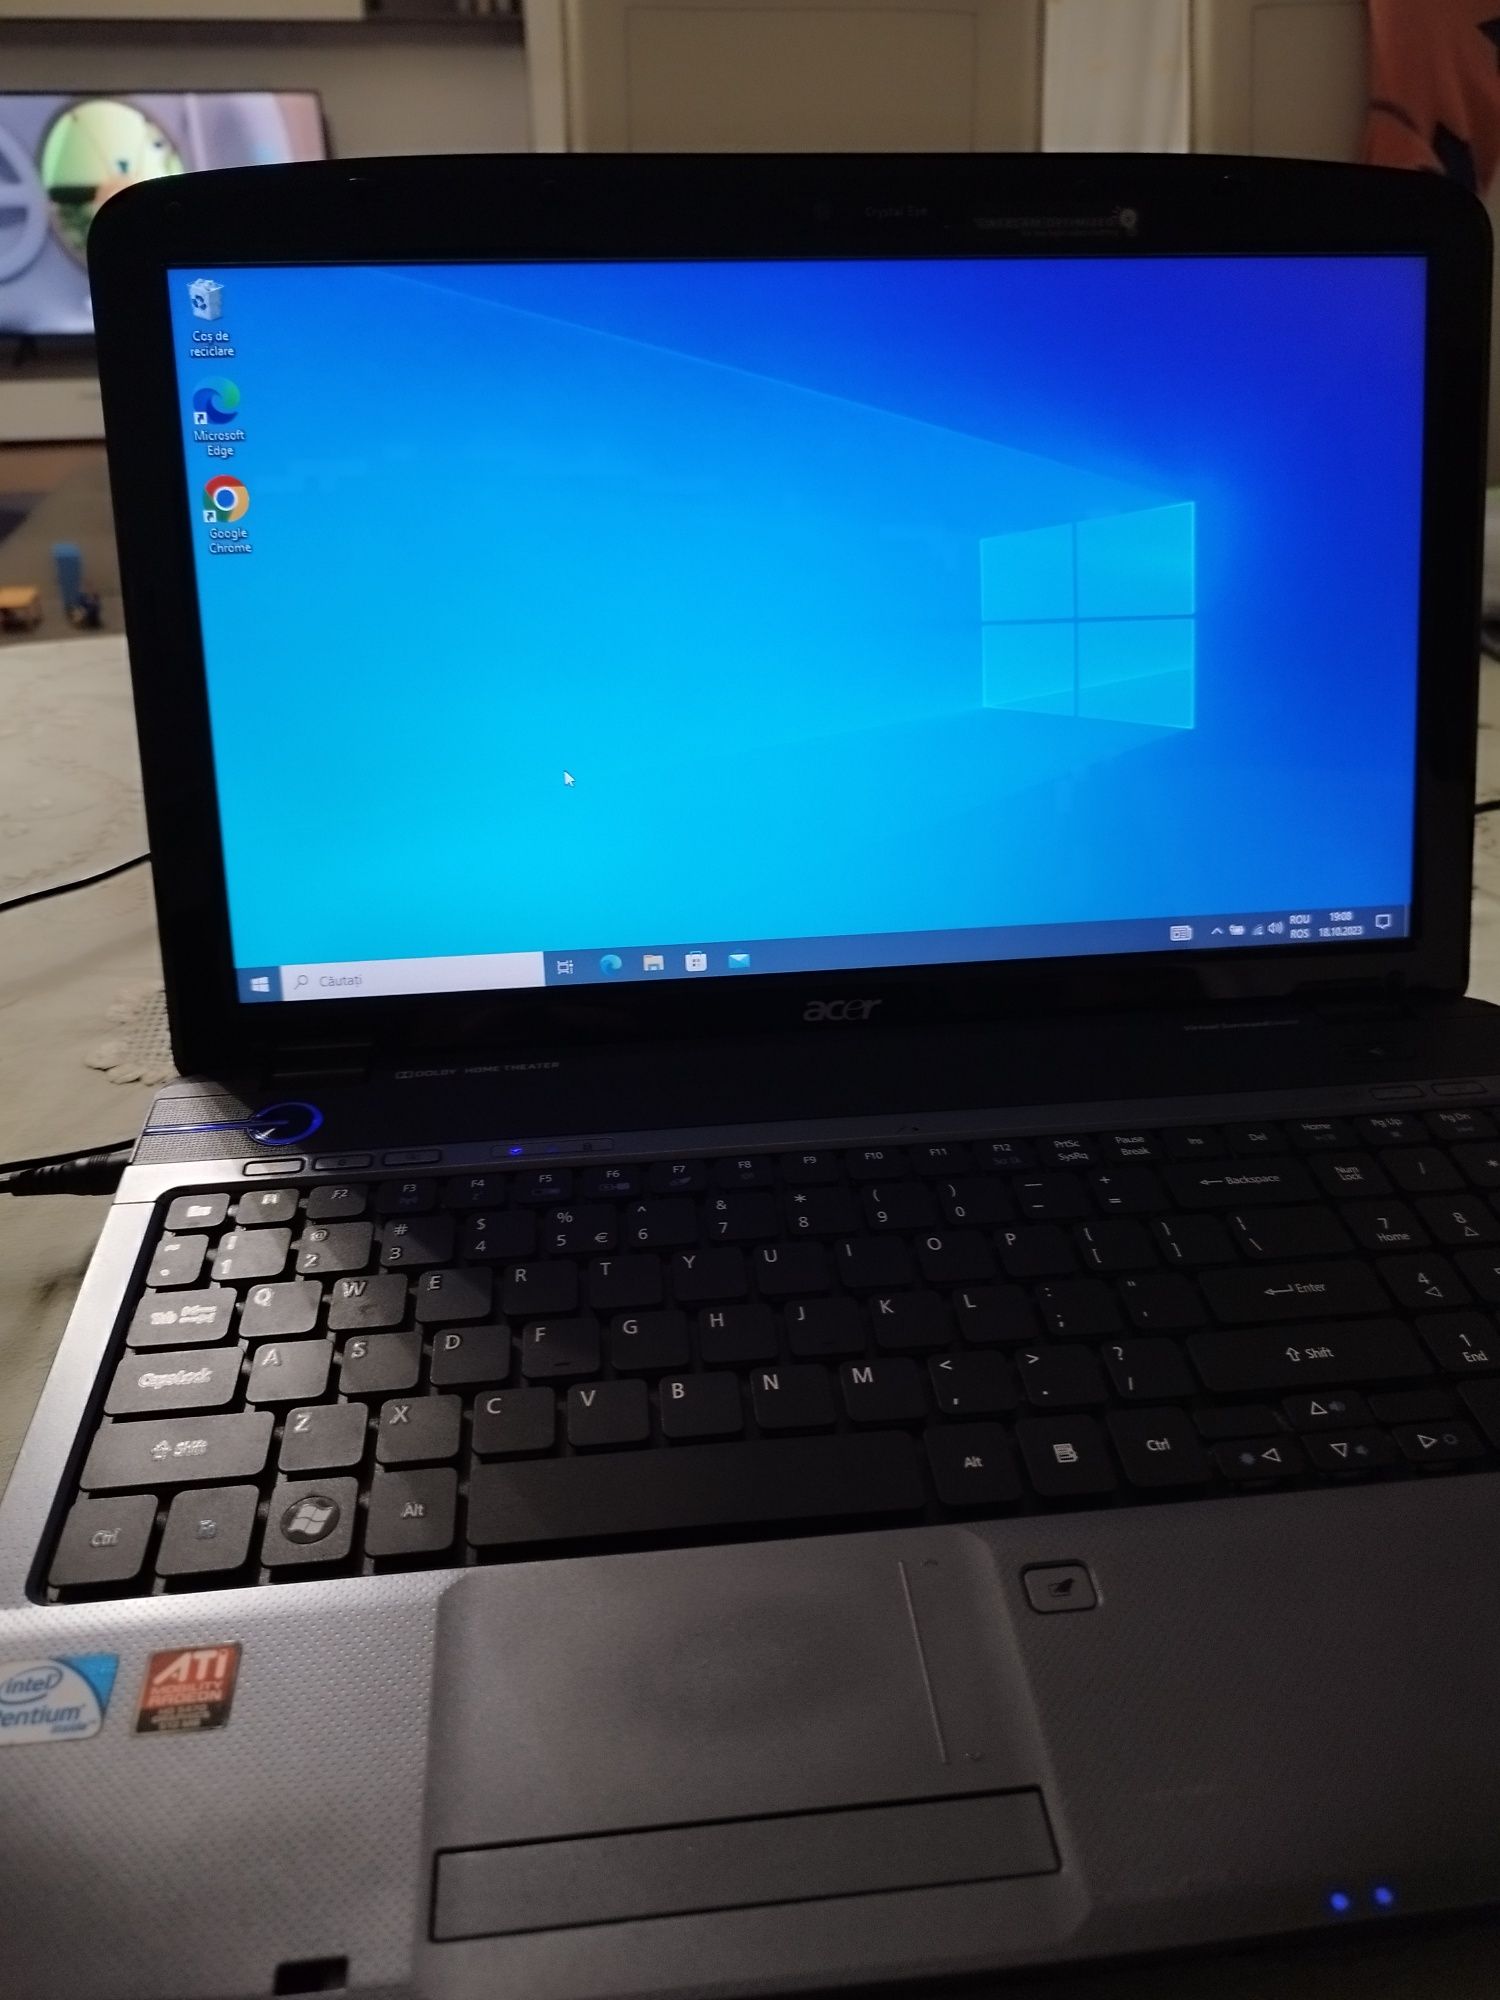 Laptop Acer aspire 5738Z